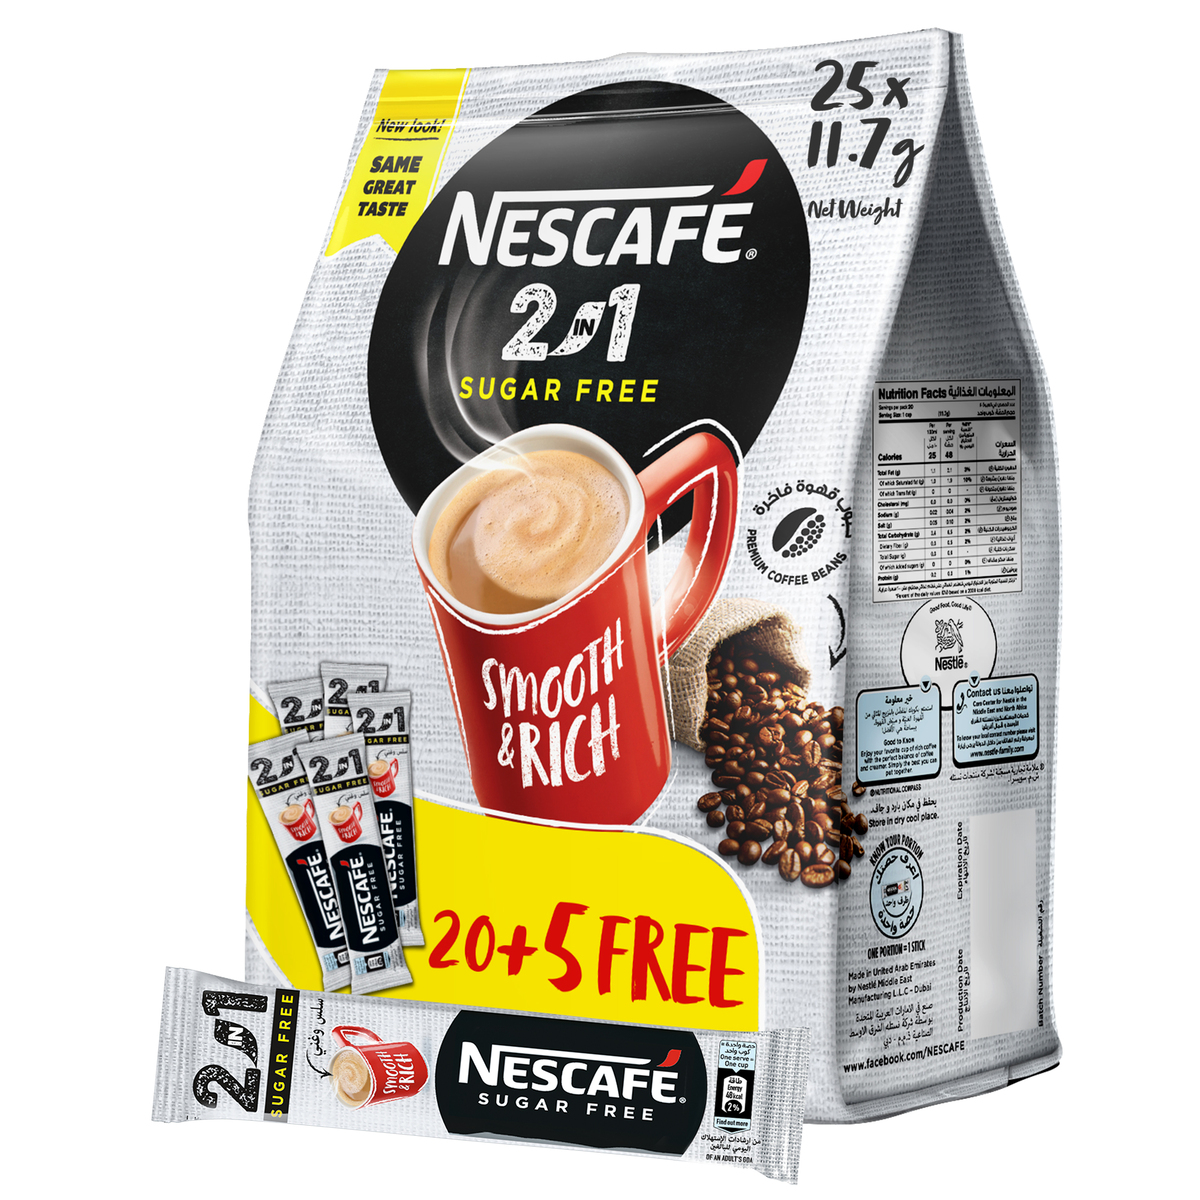 Nescafe 2in1 Smooth & Rich Coffee Mix Sugar Free 11.7g 20+5